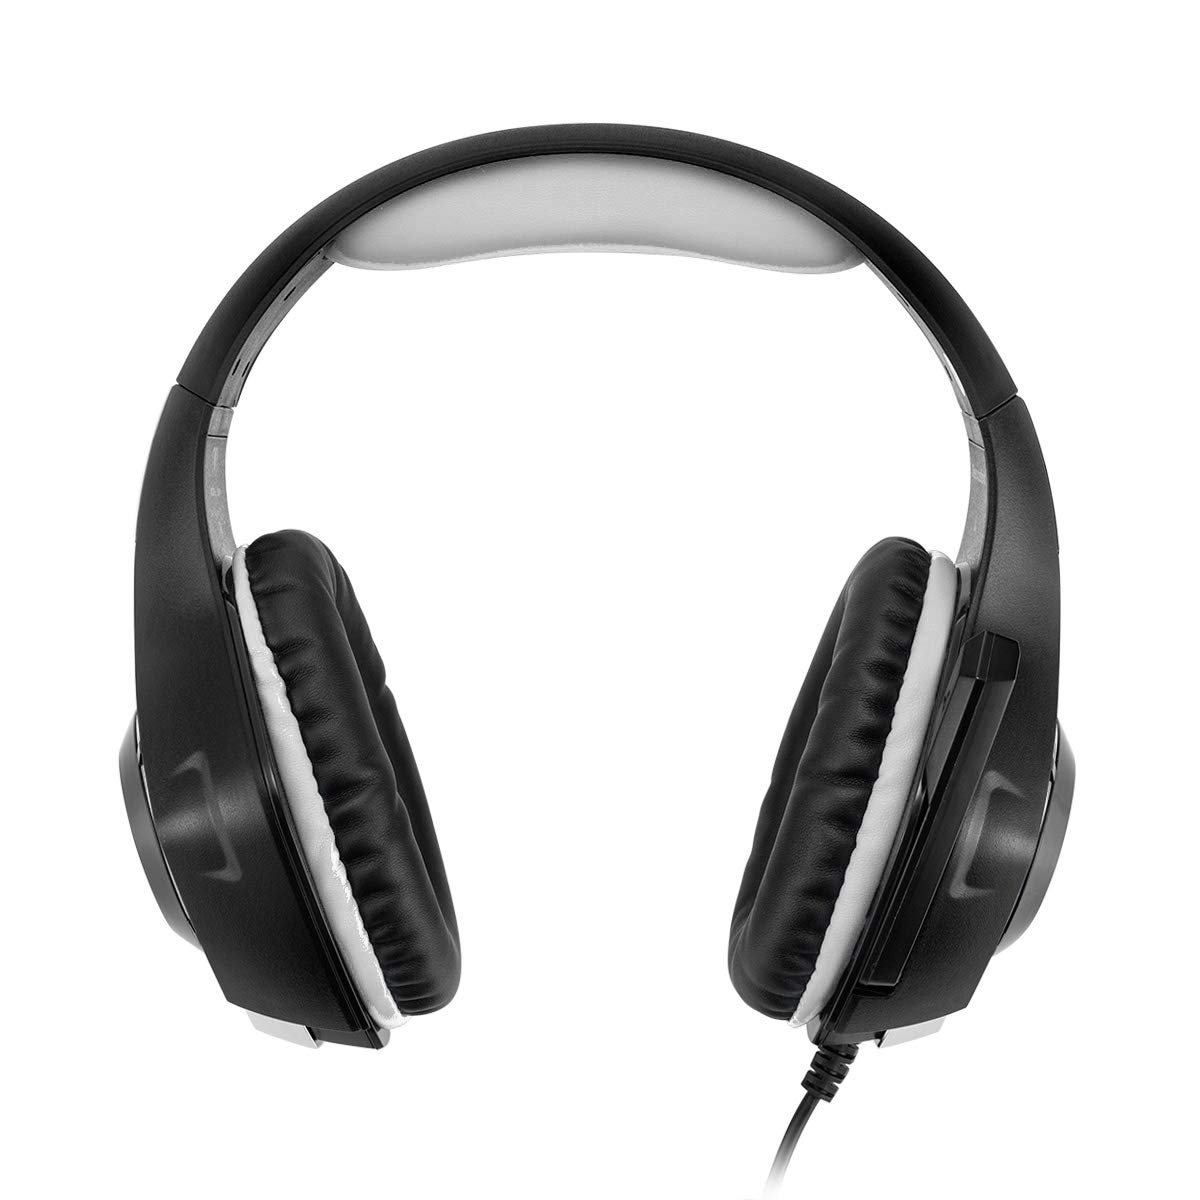 GS410 Headphones with Mic